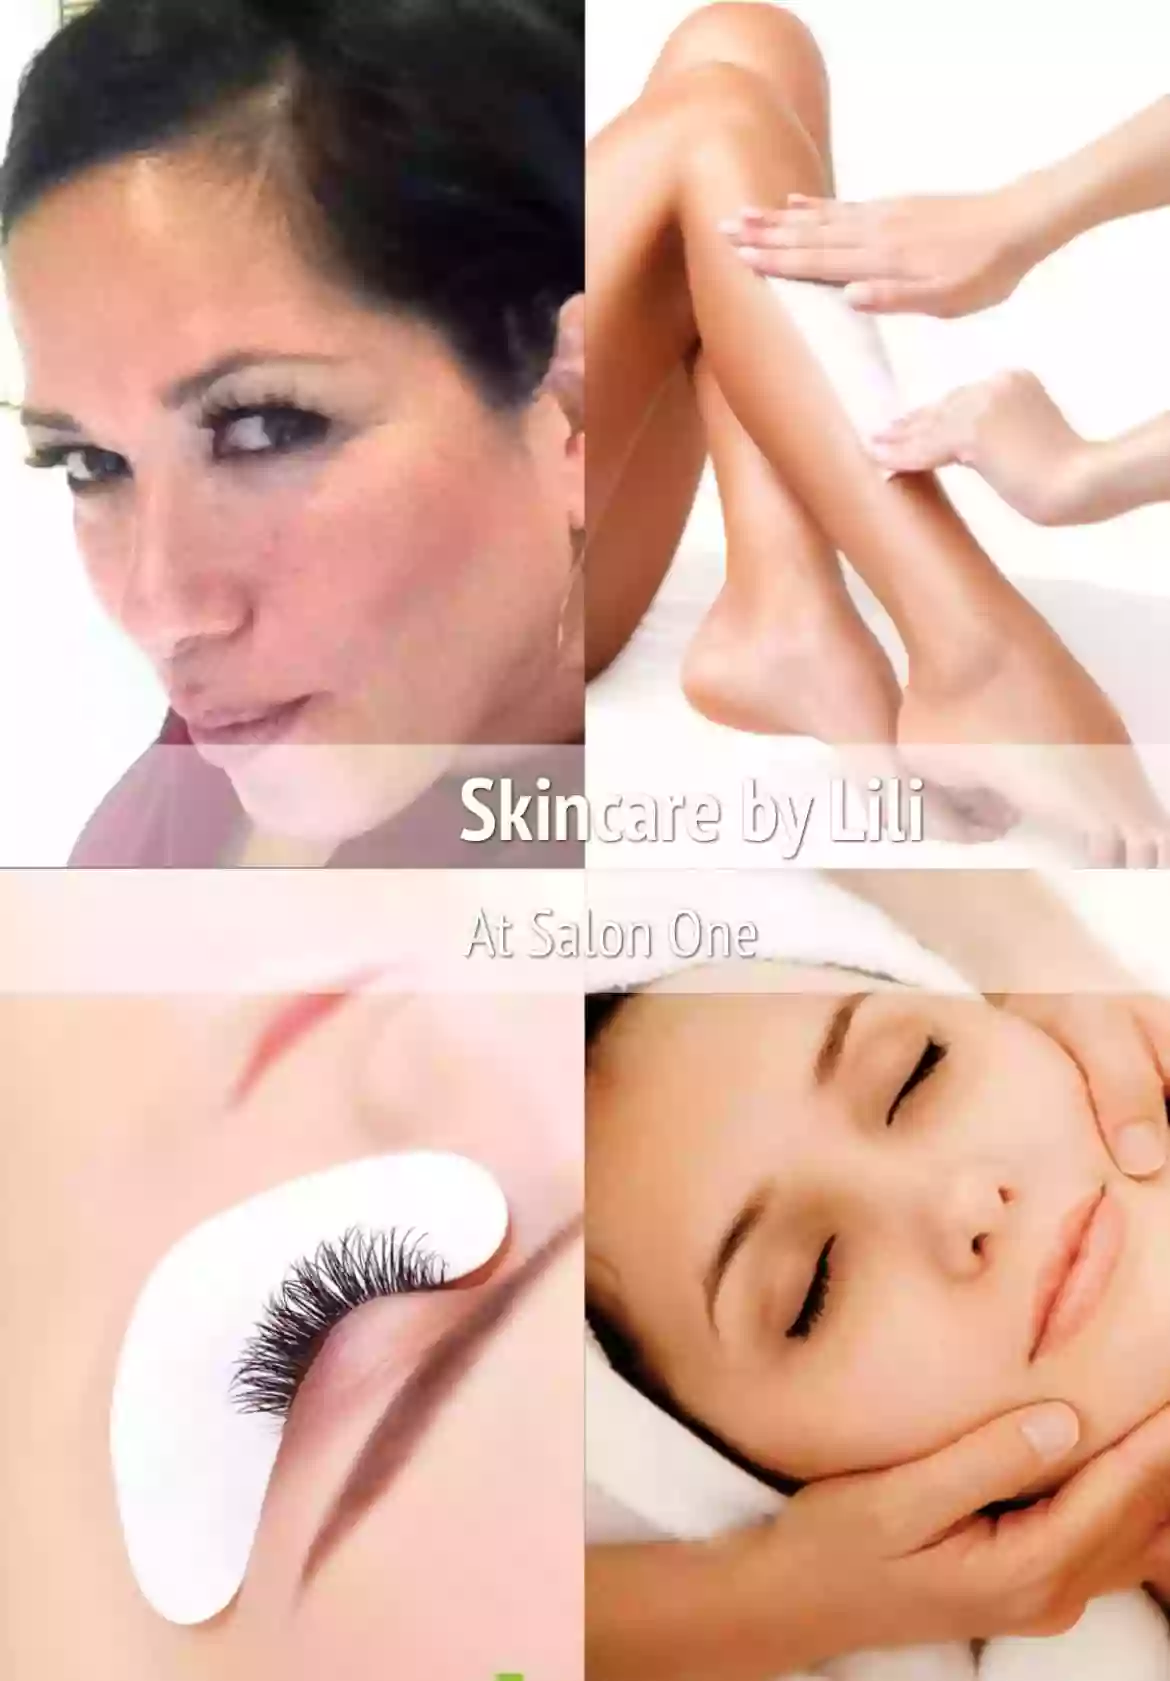 Skin care by Lili @ Salon One